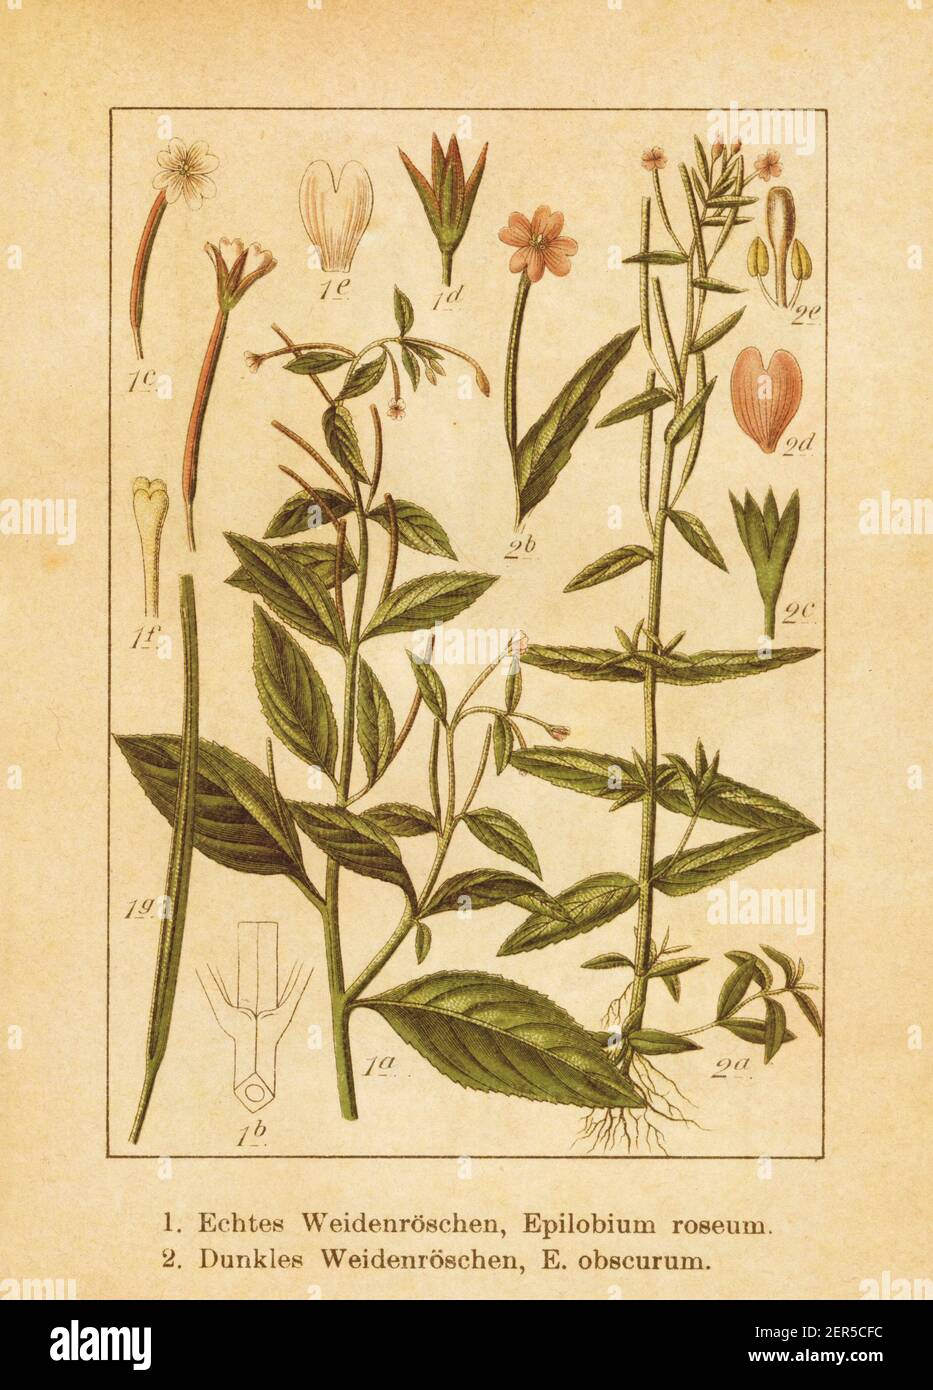 Antique illustration of an epilobium roseum (also known as pale willowherb) and epilobium obscurum (also known as dwarf willowherb or short-fruited wi Stock Photo